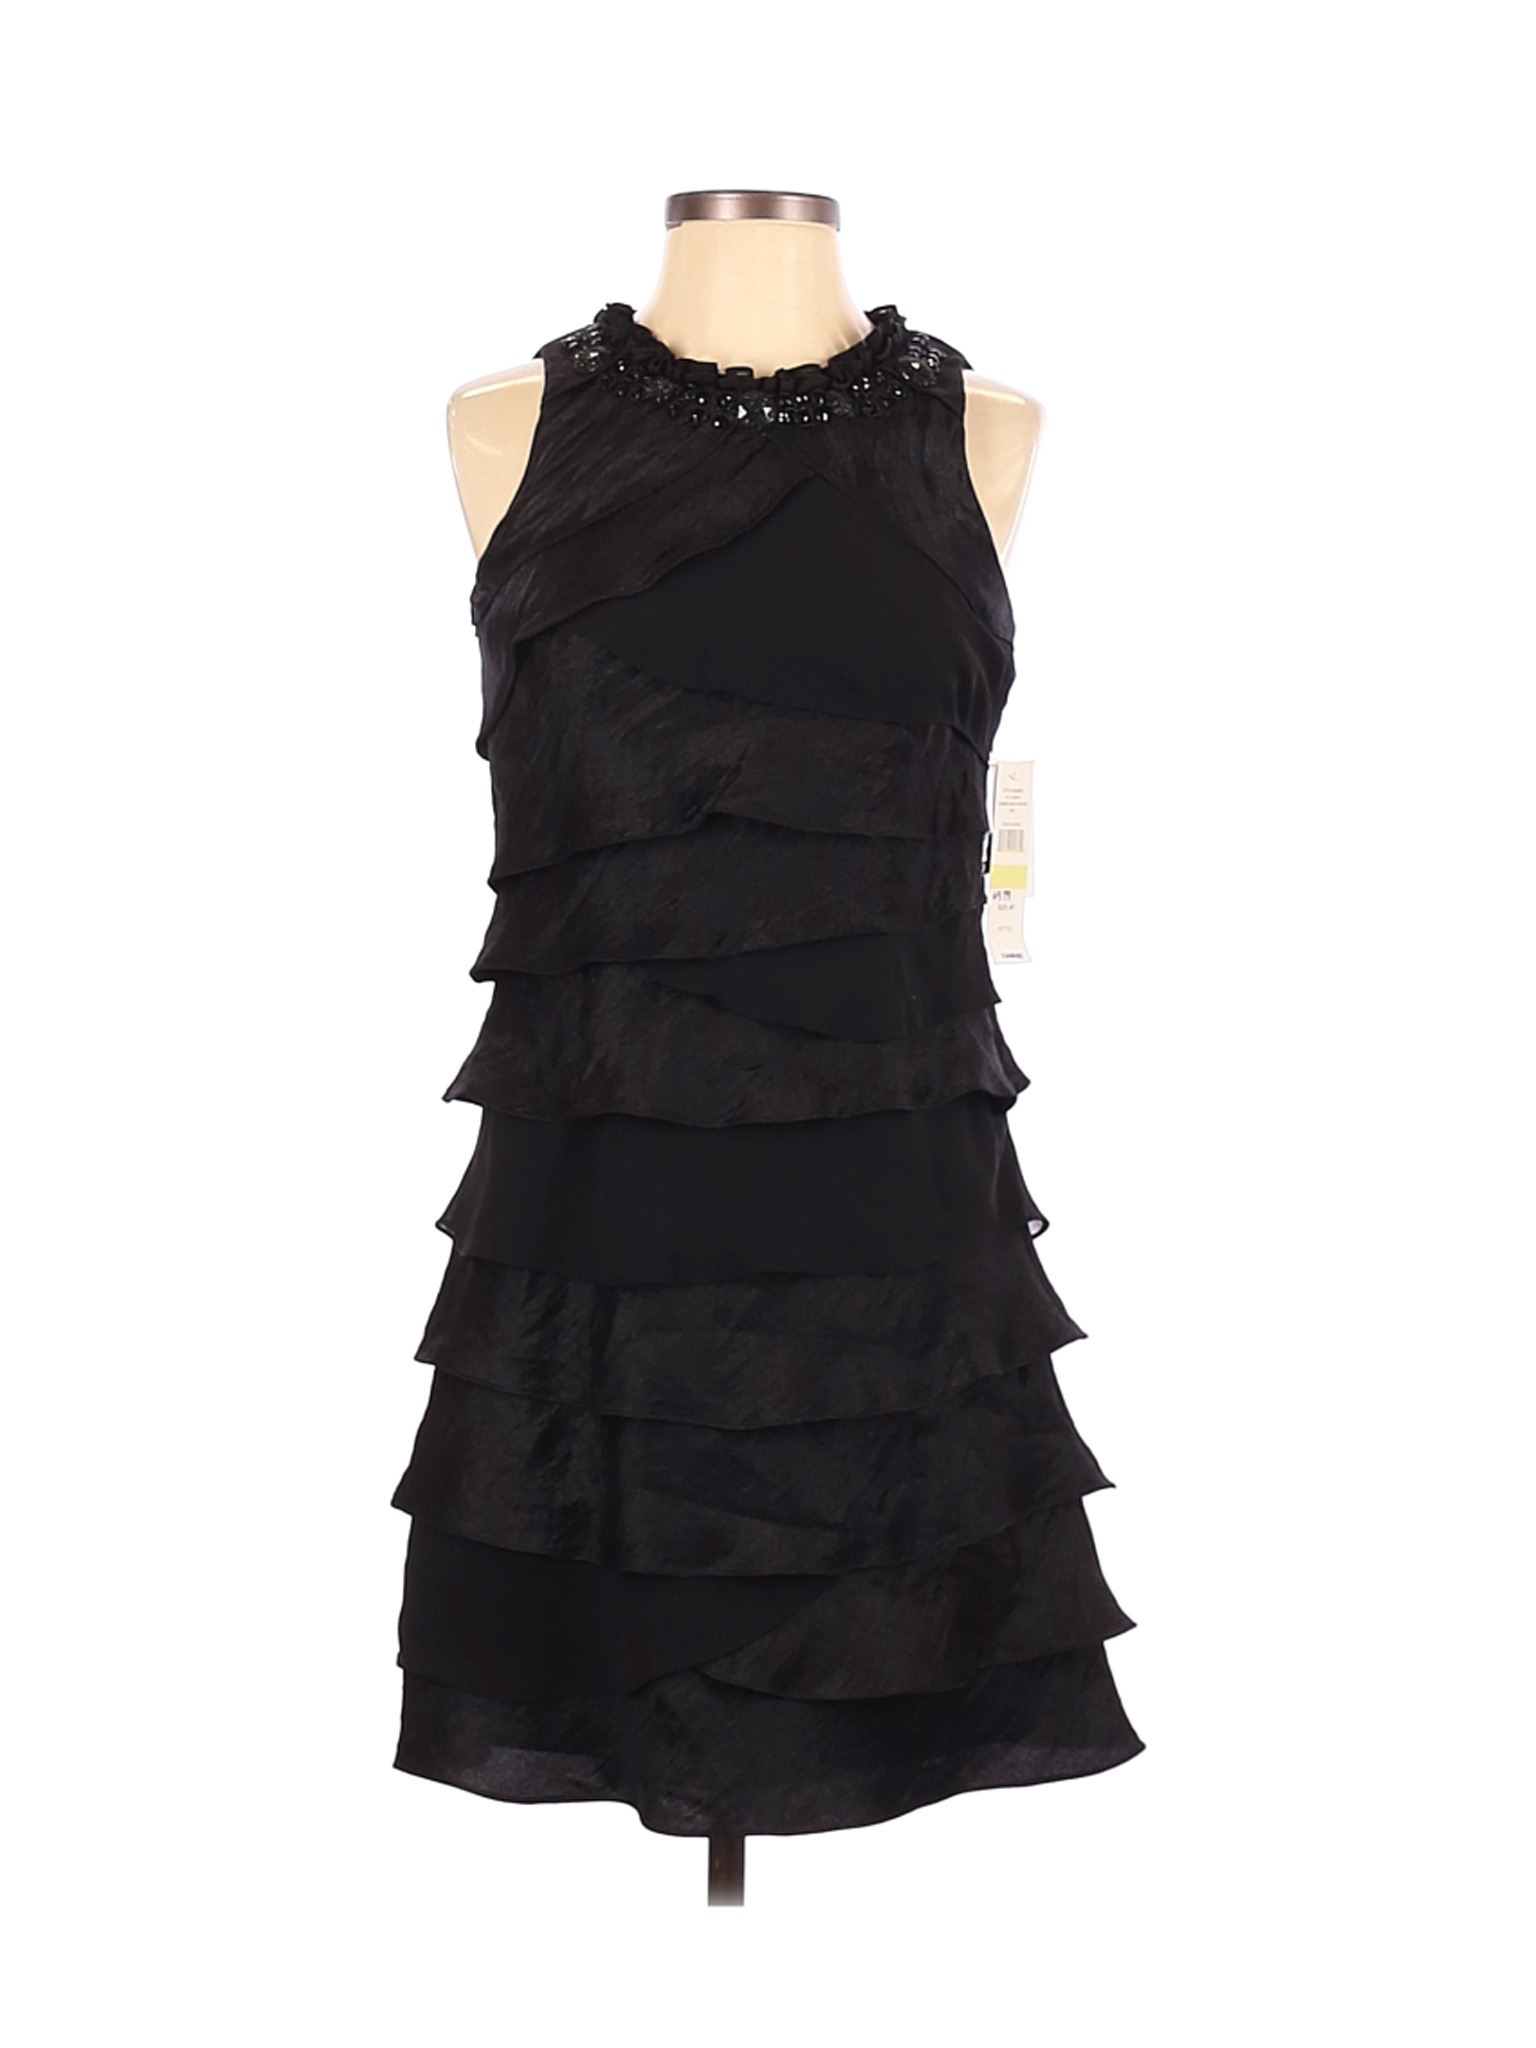 NWT S.L. Fashions Women Black Cocktail Dress 4 Petites | eBay